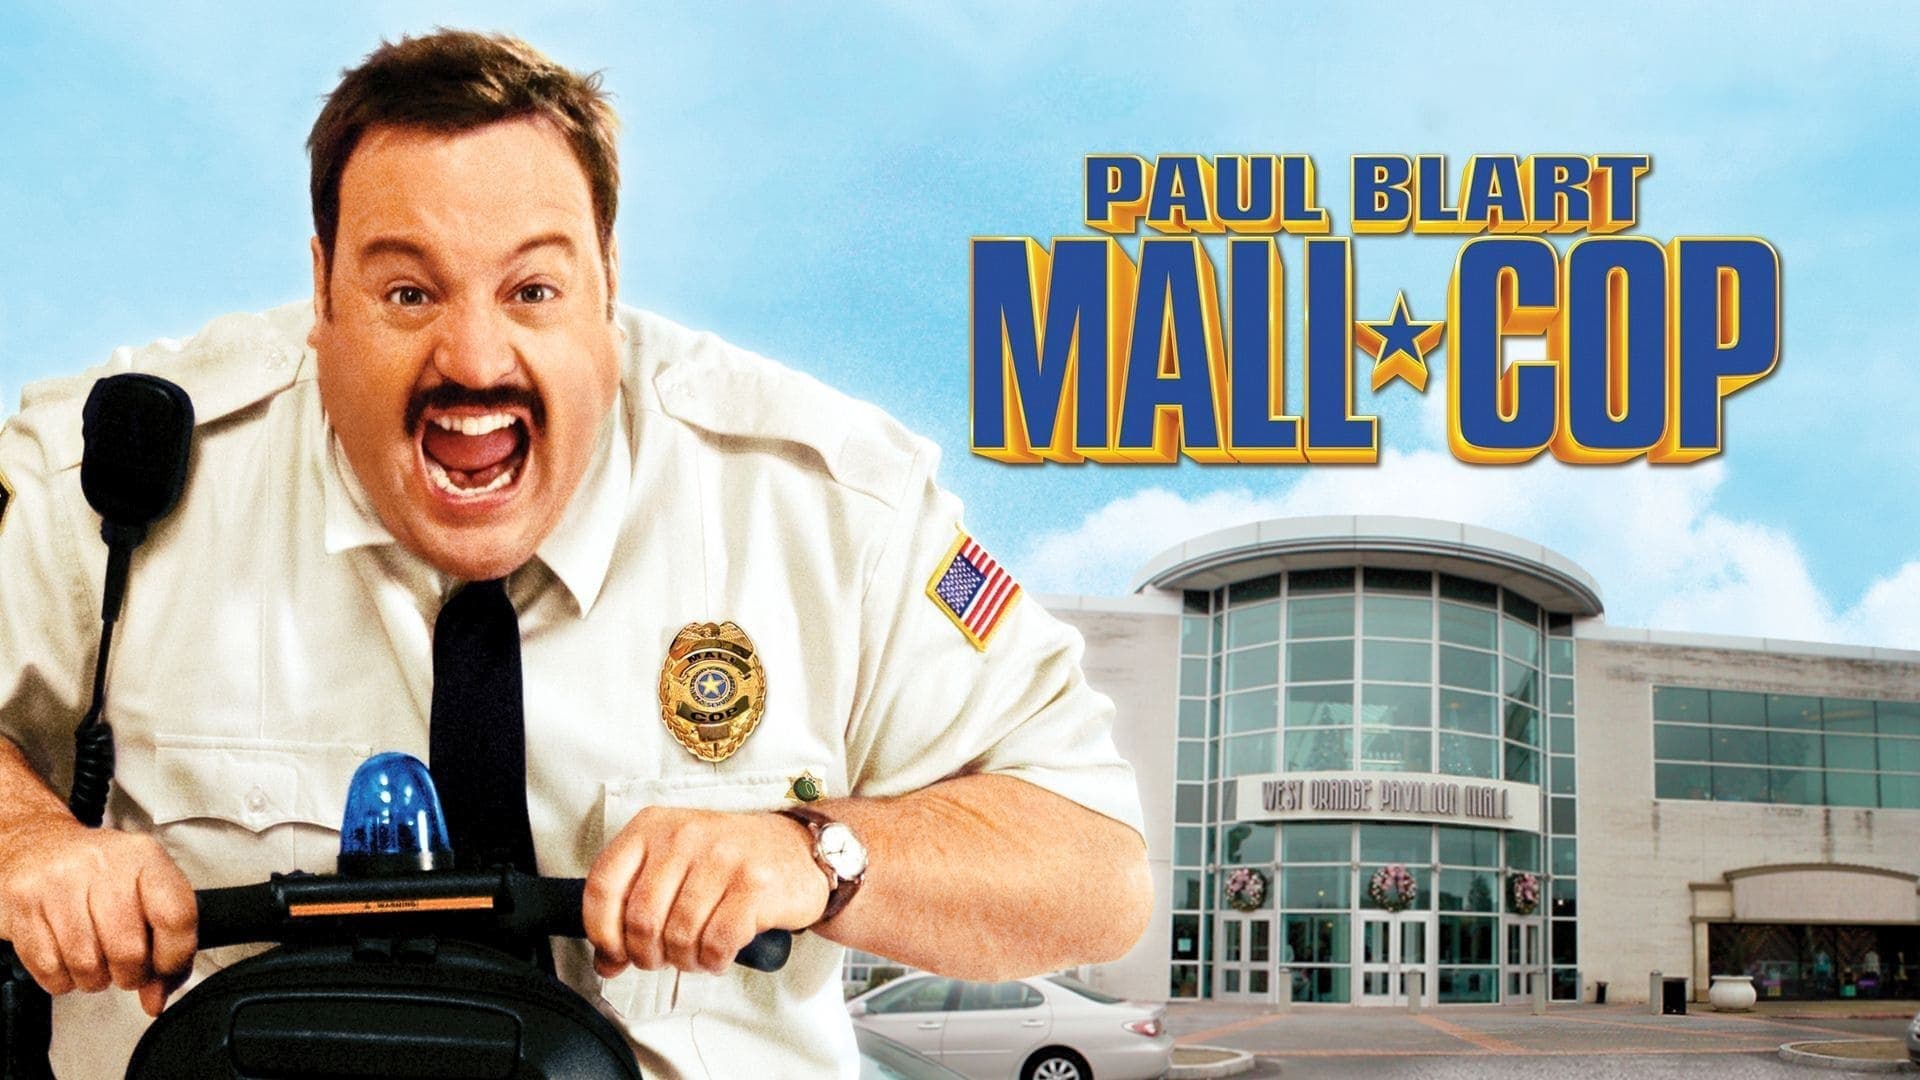 Paul Blart: Mall Cop Photos.